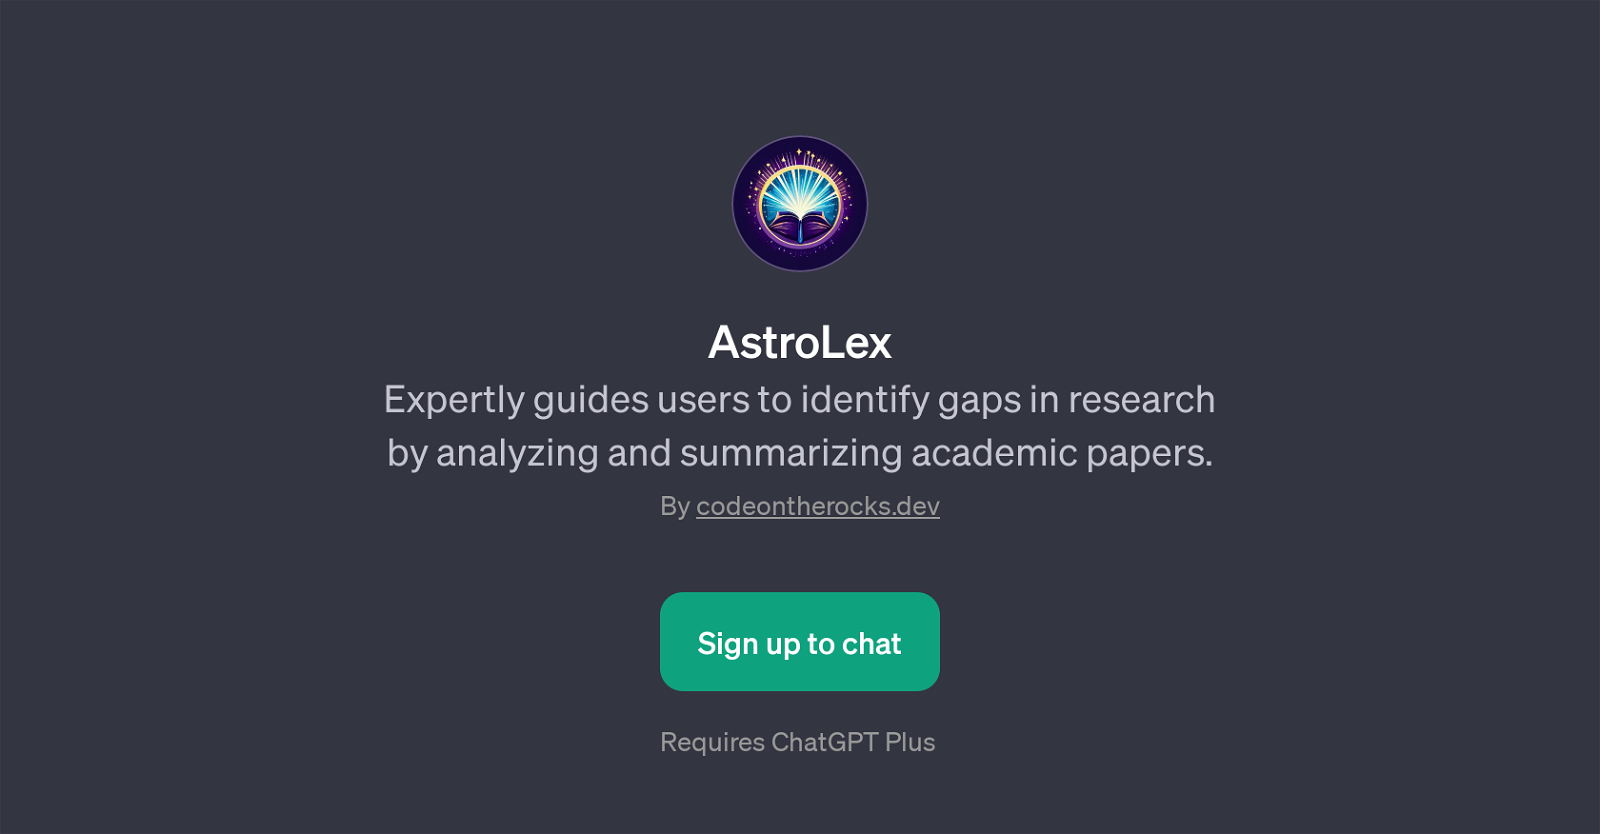 AstroLex website